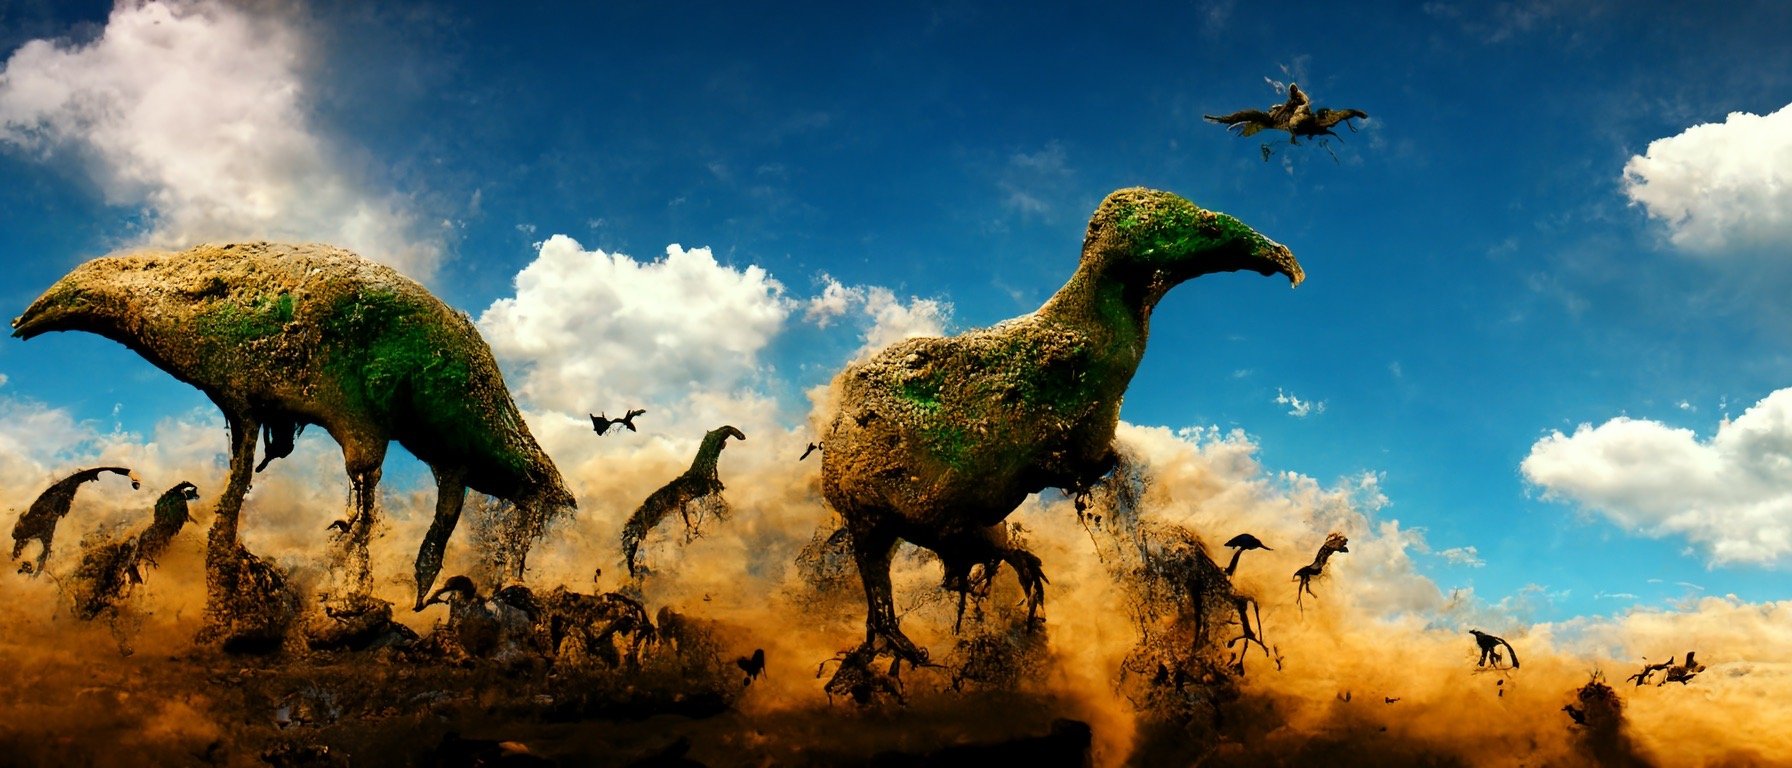 cee38f28-40a8-4d1e-8b0c-b2a02c4f986b_S3RAPH_dinosaur_footprint_in_mud._Flock_of_birds_in_green_prehistoric_jungle._Epic_sky._Cinematic_compositi.JPG